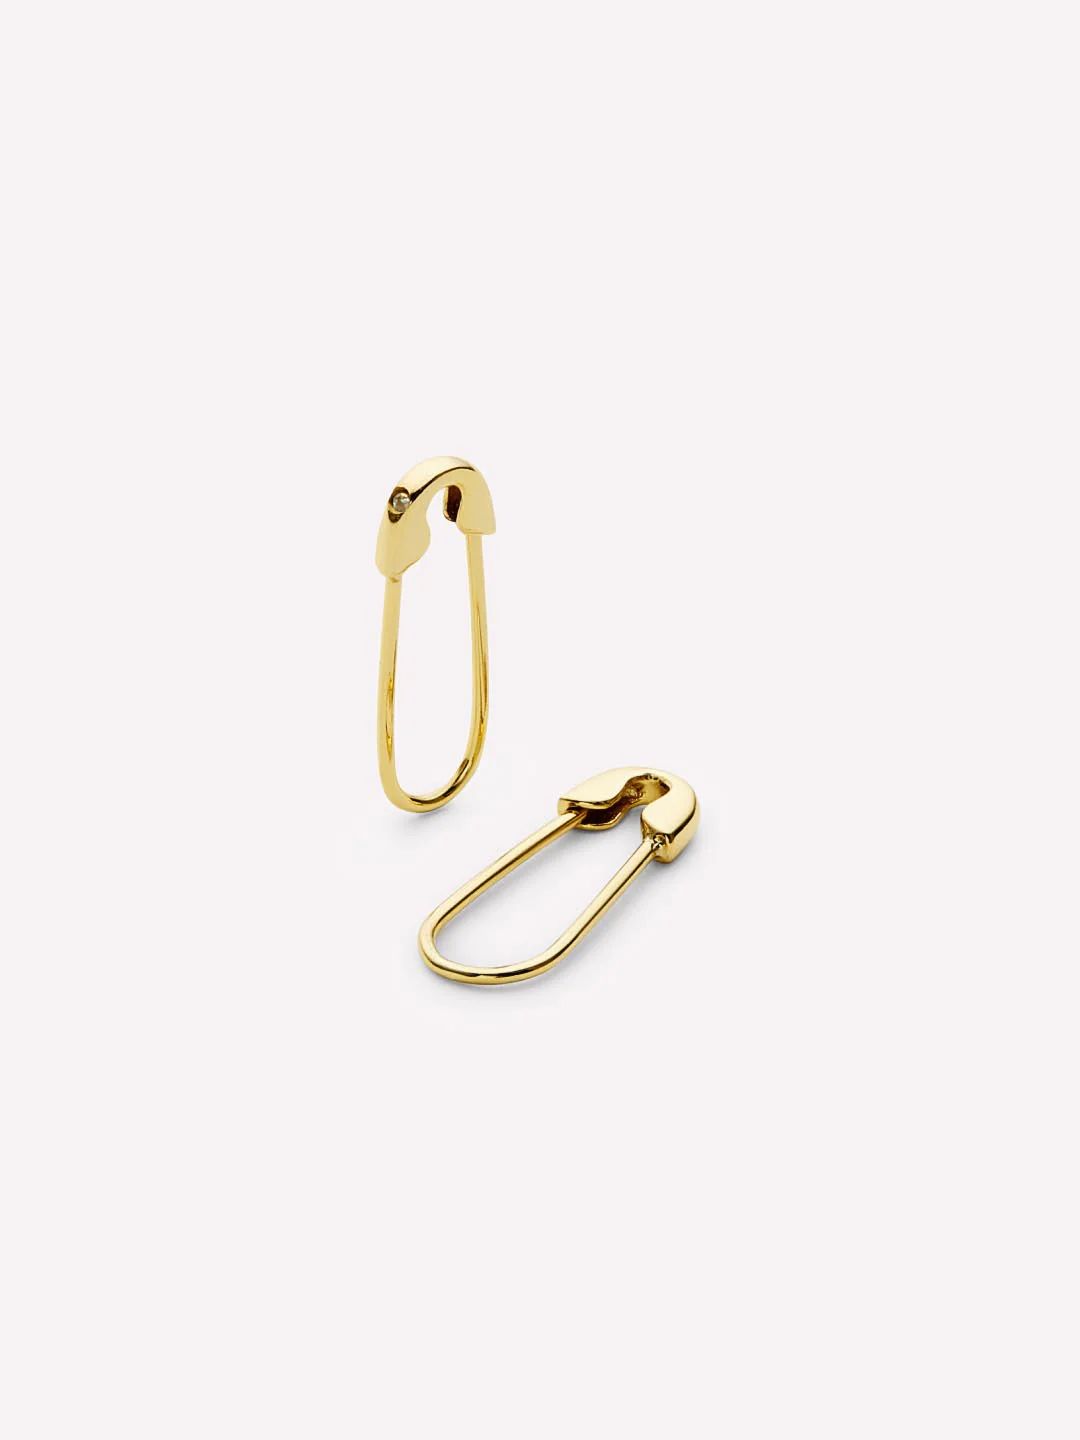 Safety Pin Earrings | Ana Luisa